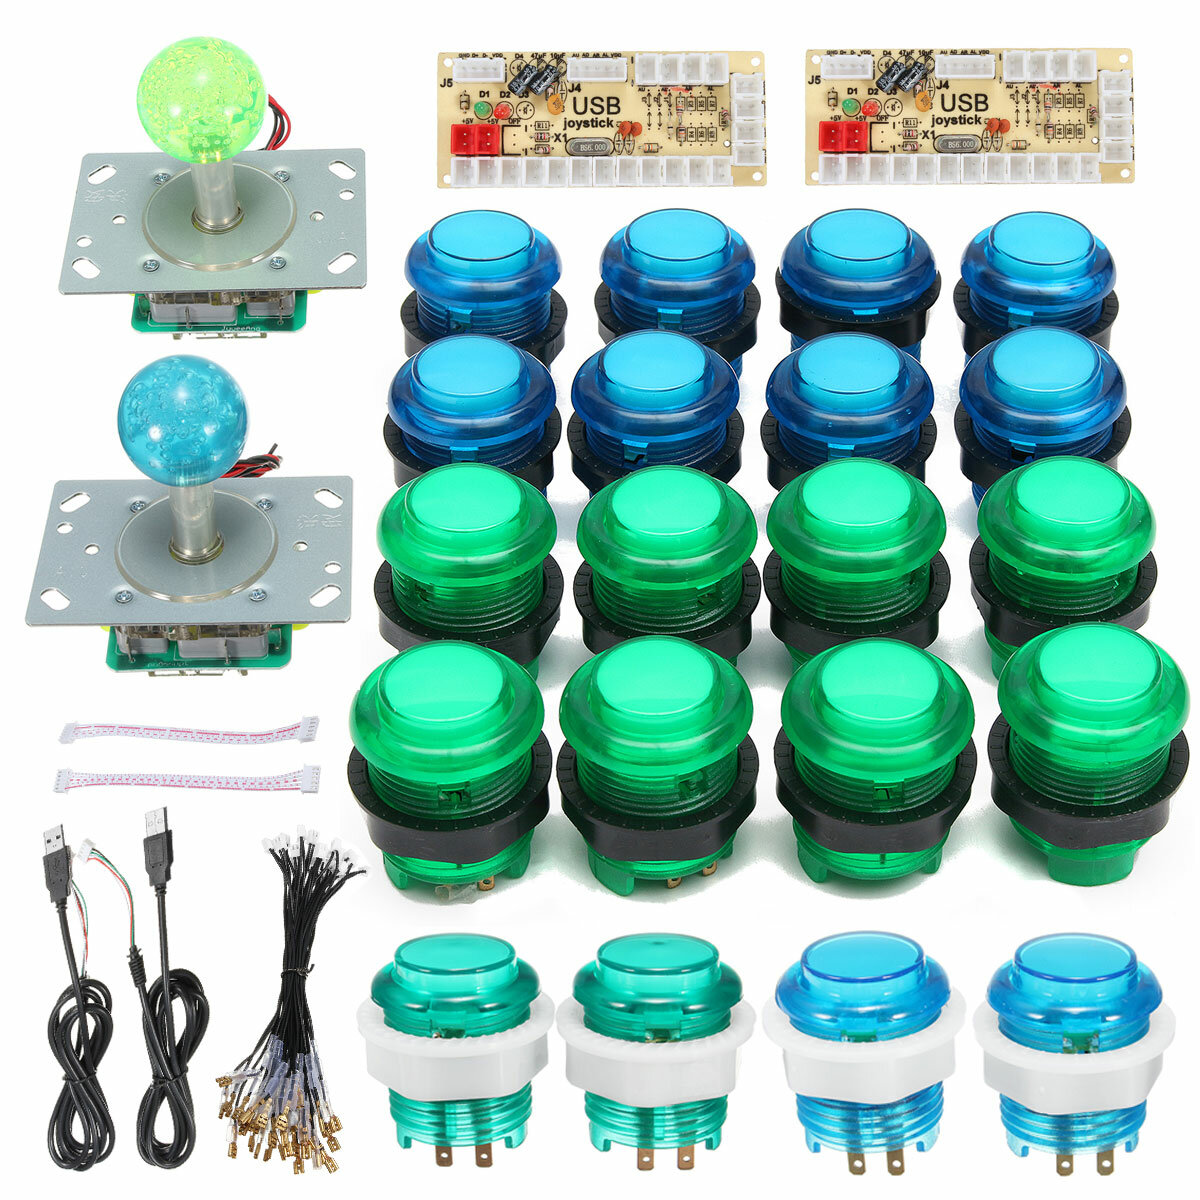 

DIY Joystick Arcade Kits 20 LED Arcade Buttons + 2 Joysticks + 2 USB Encoder Kit + Cables Arcade Game Parts Set